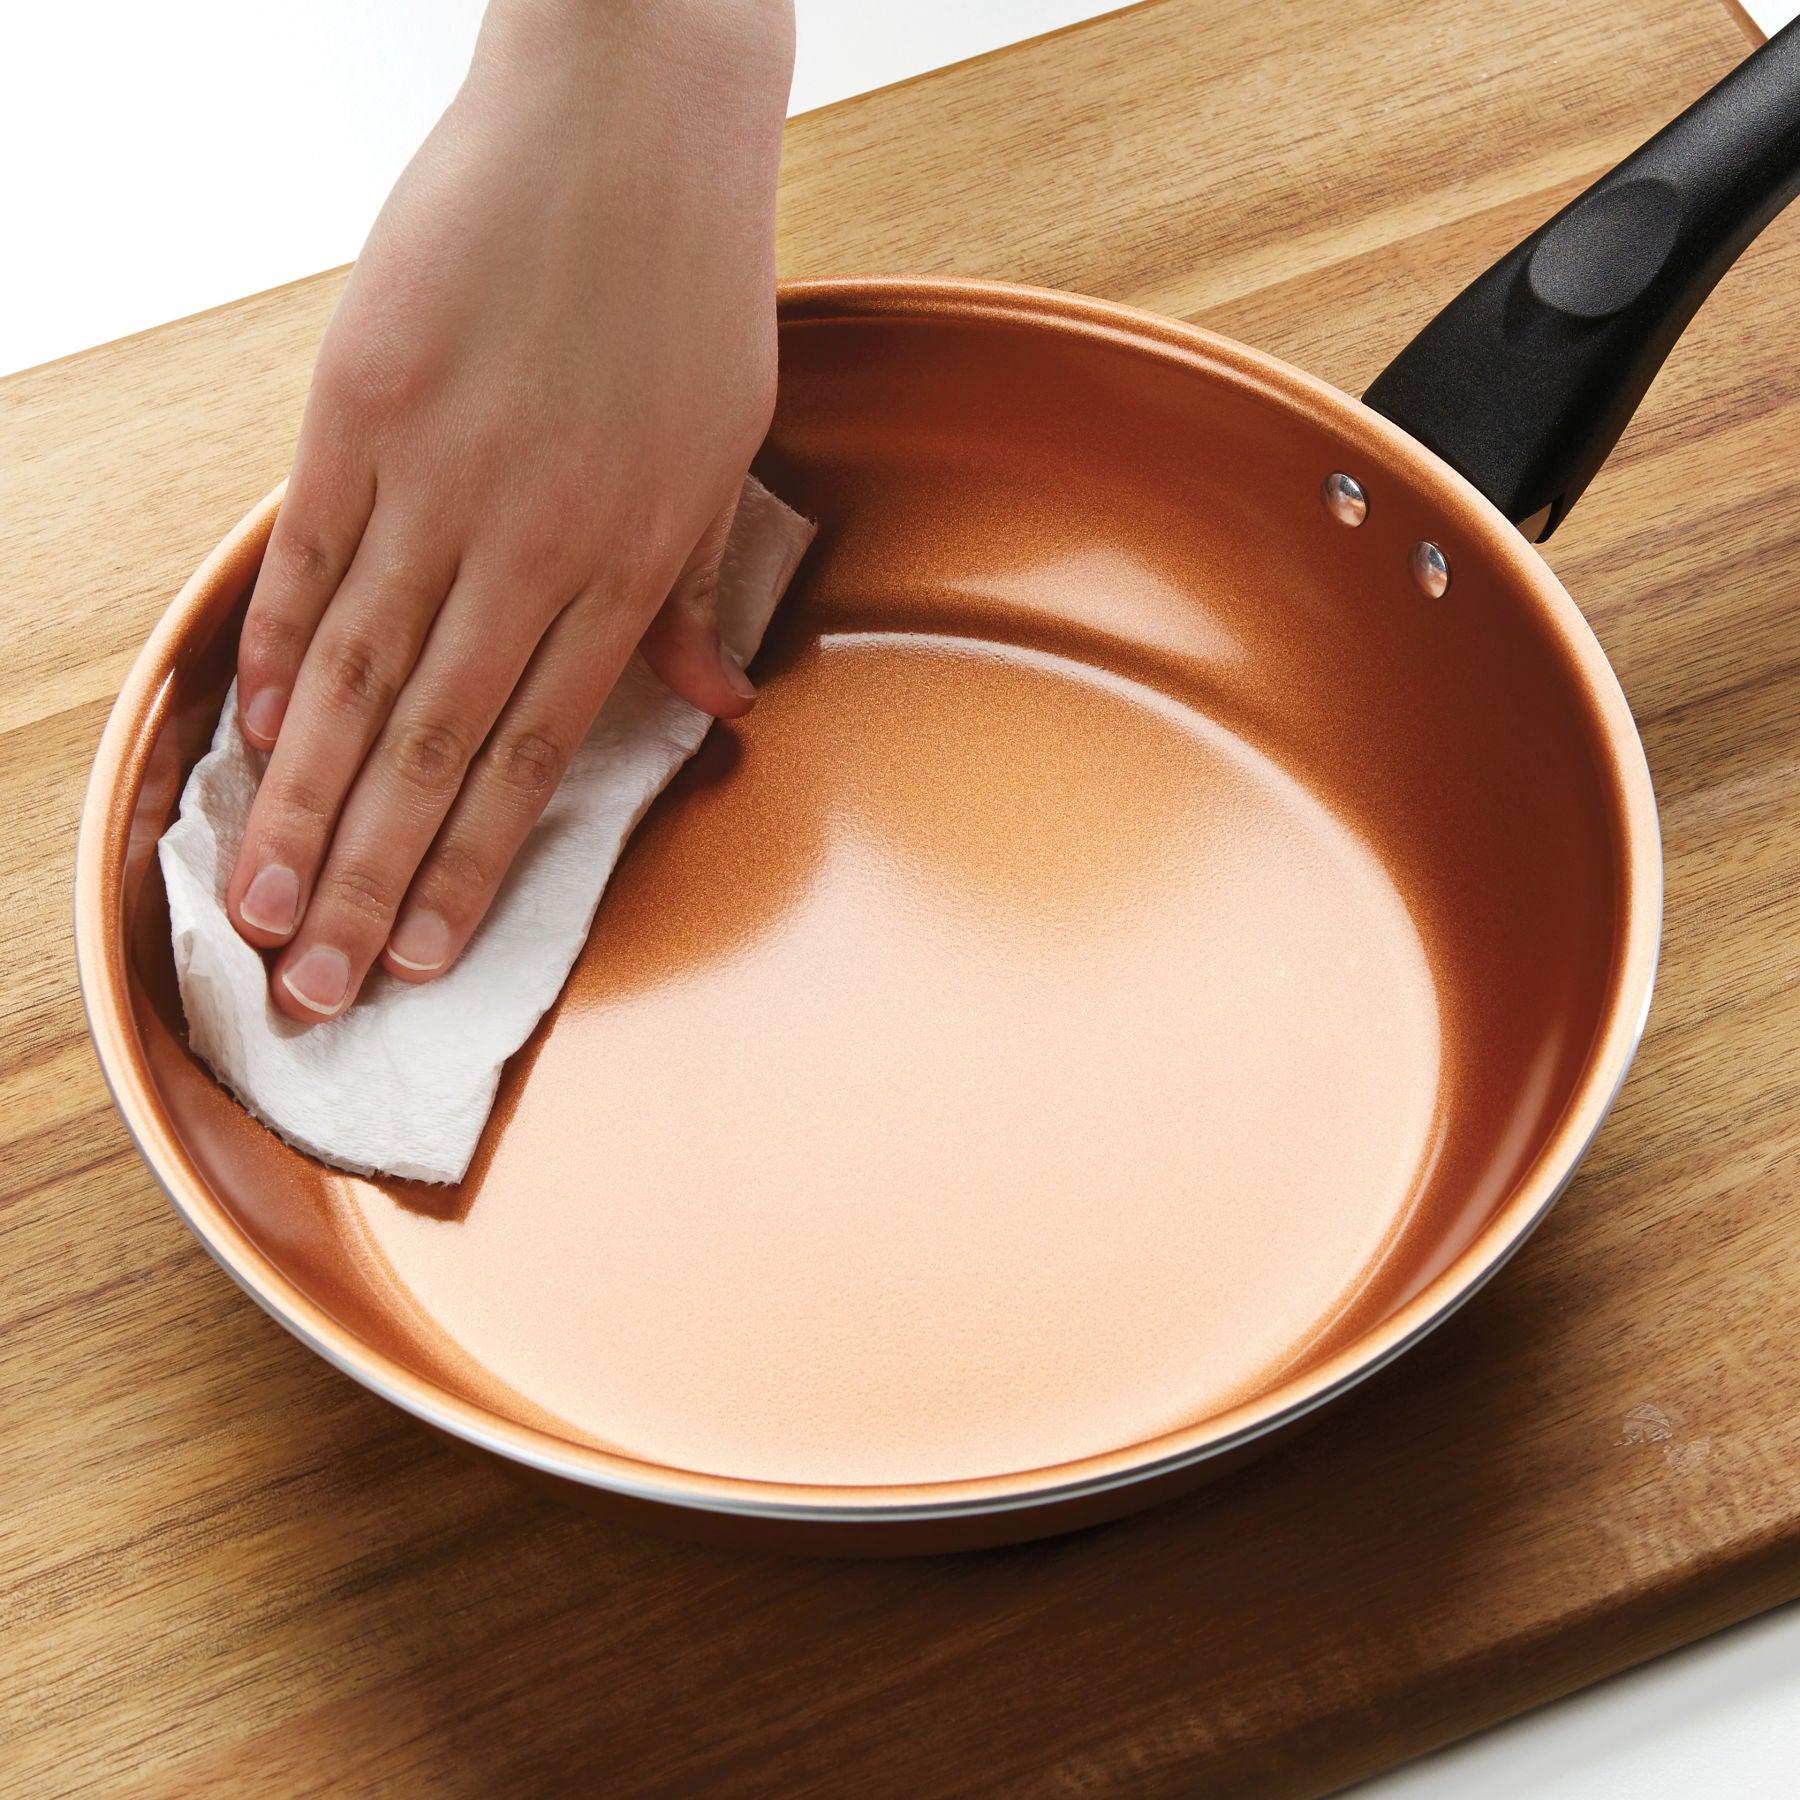 12.5-Inch Copper Ceramic Nonstick Deep Frying Pan — Farberware Cookware